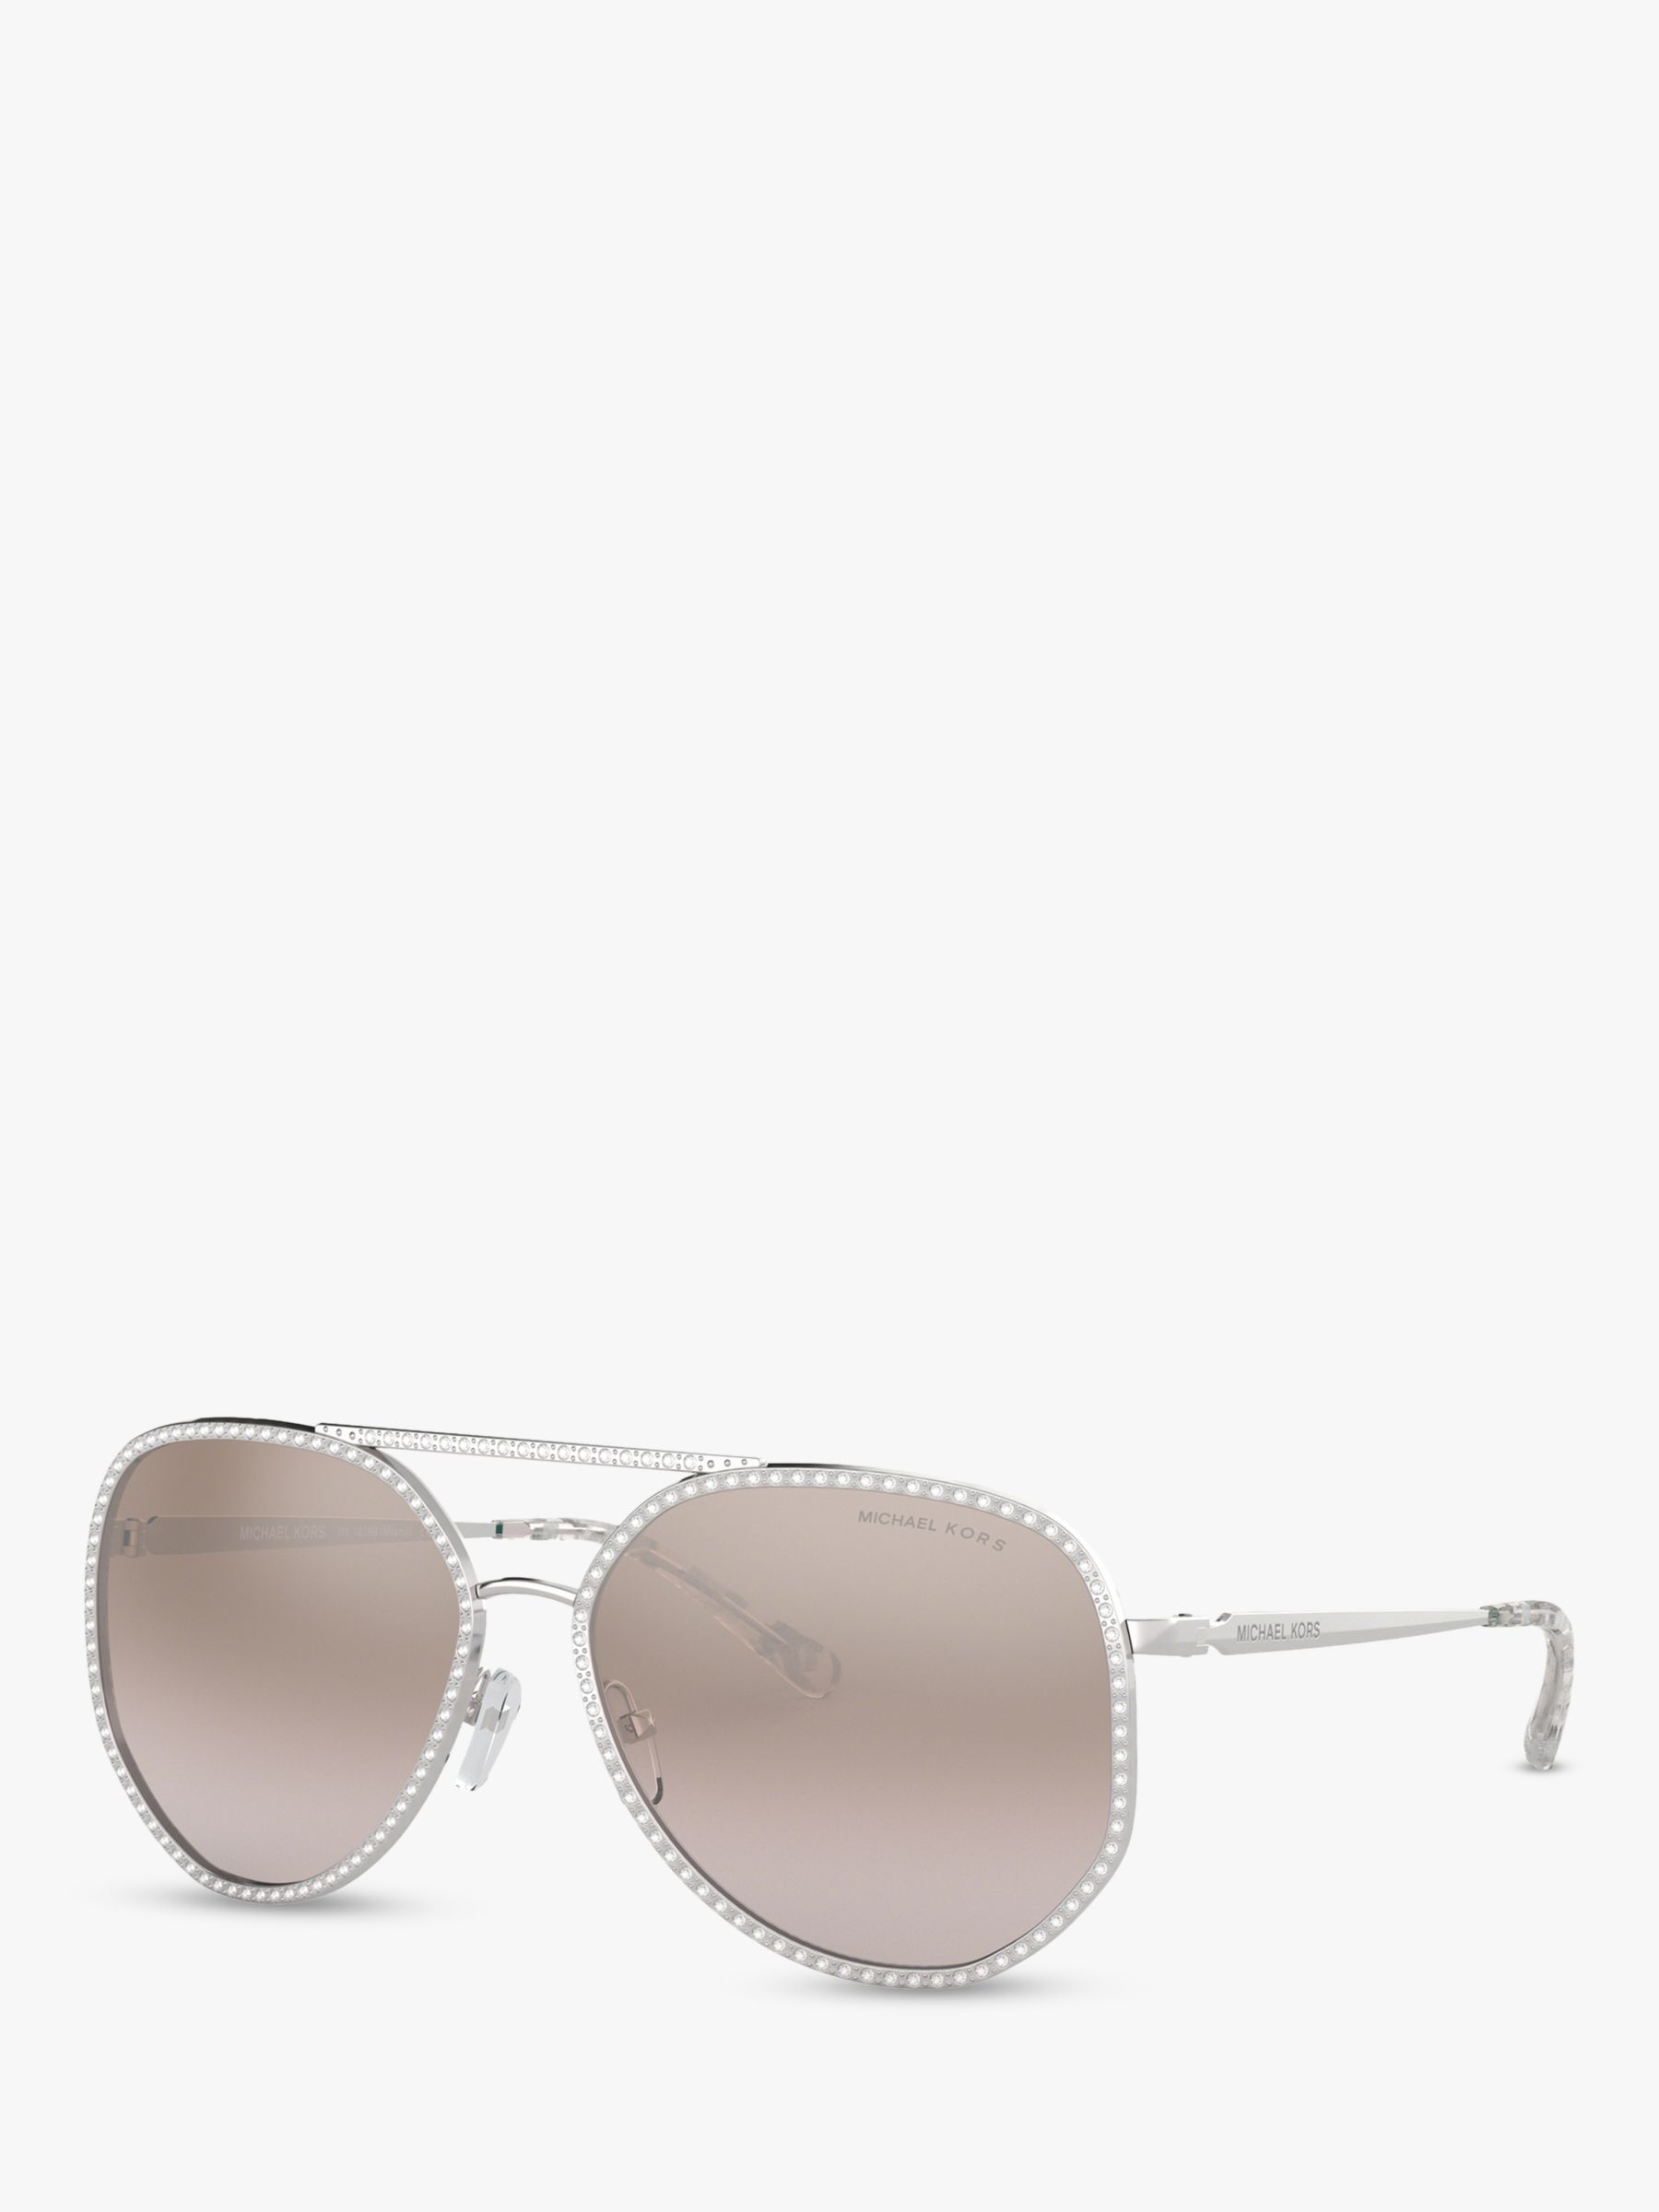 Michael Kors MK1039B Women's Miami Sunglasses, Silver/Pink Mirror